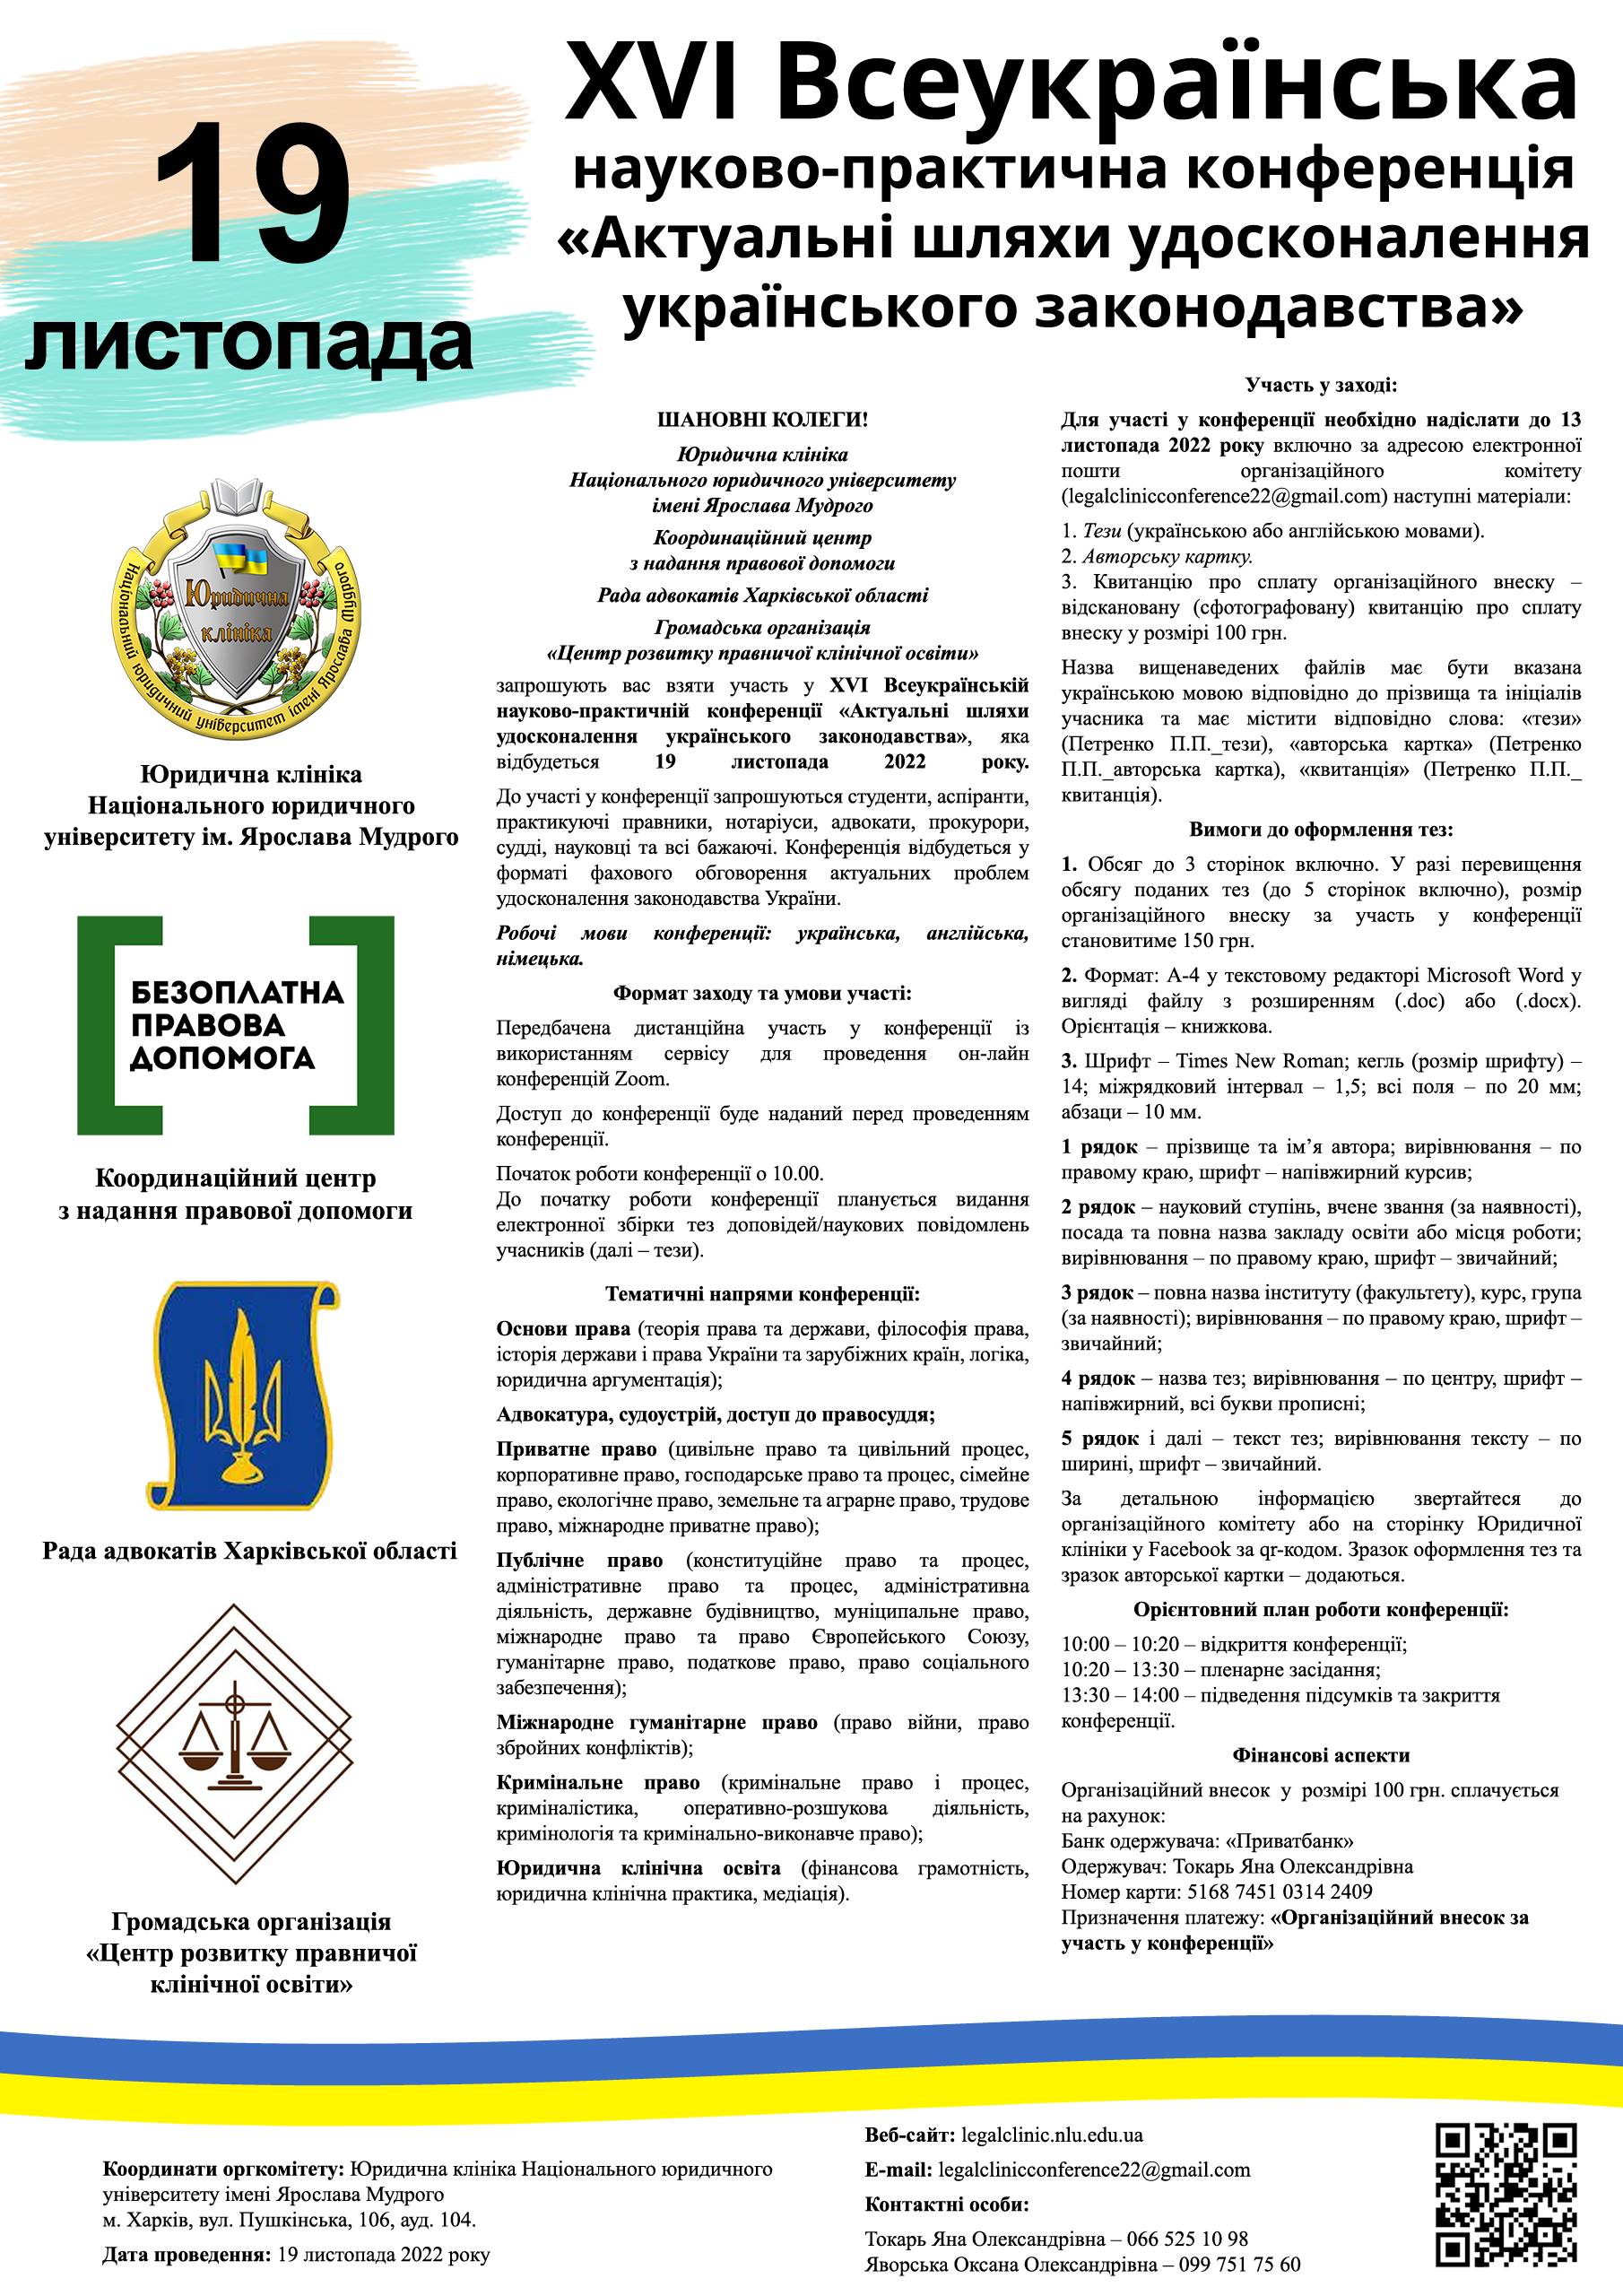 ХVІ Всеукраїнська науково-практична конференція «Актуальні шляхи удосконалення українського законодавства»